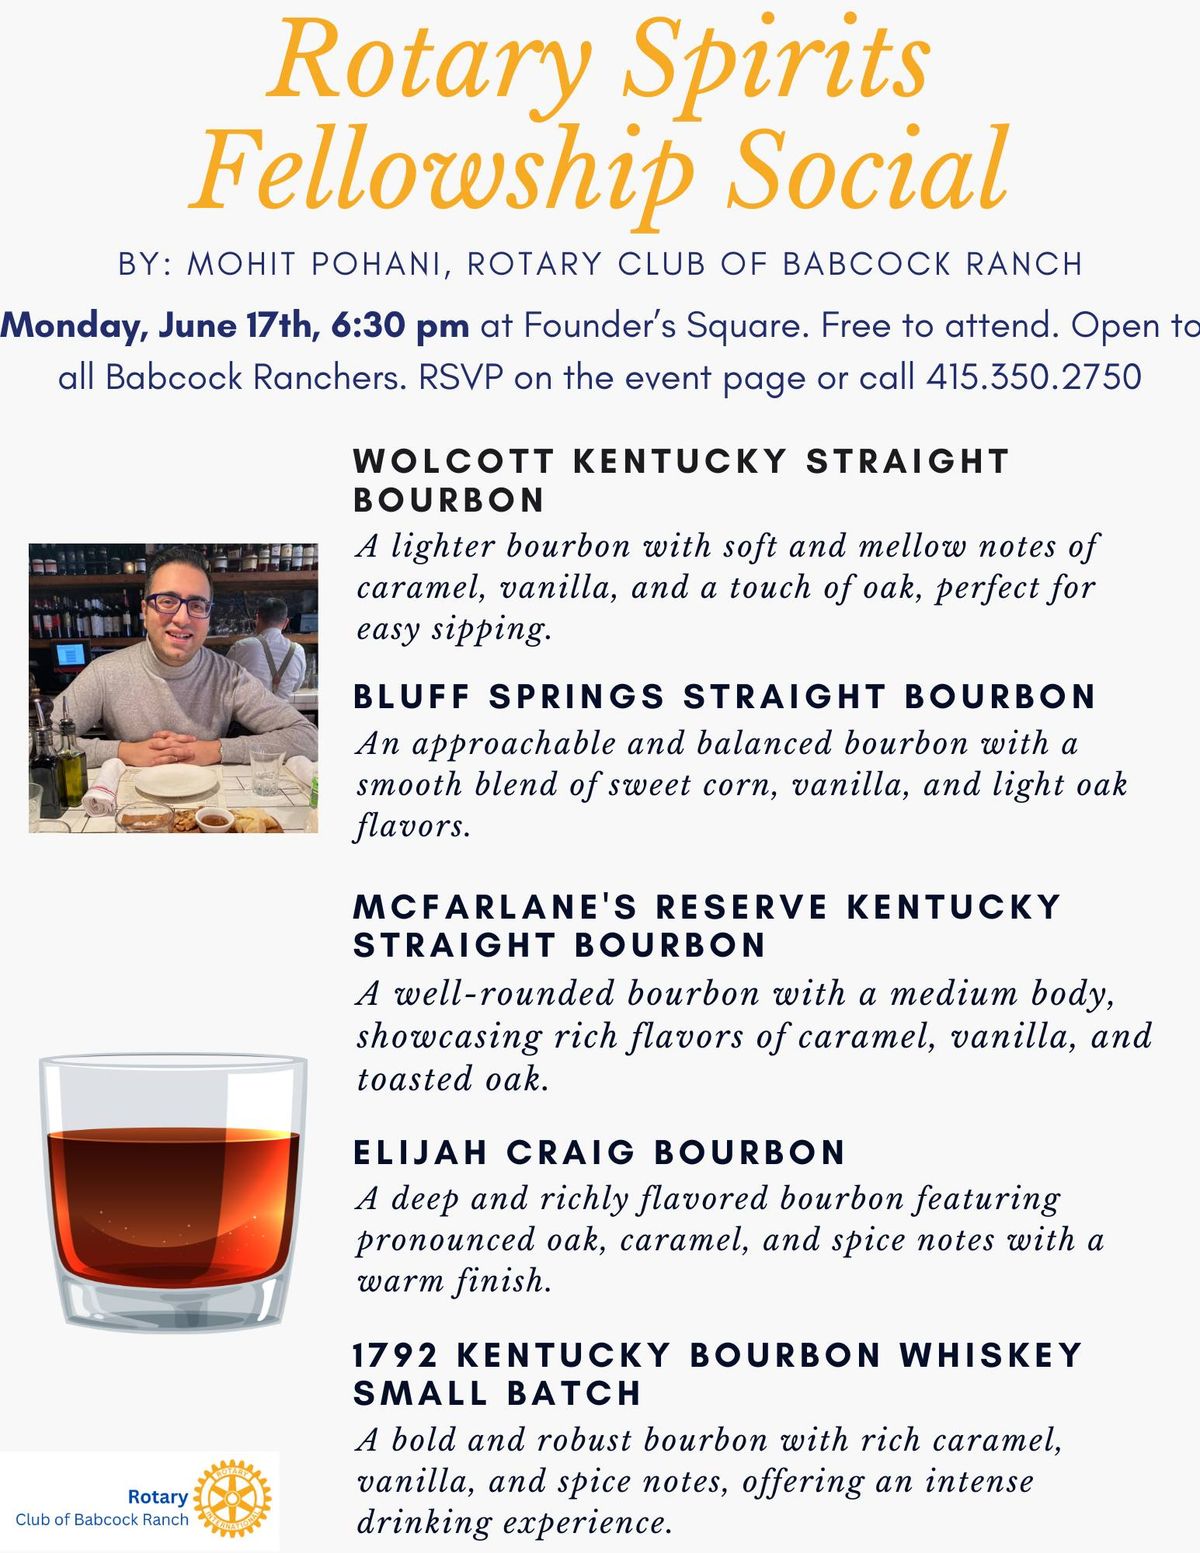 Rotary Spirits (Bourbon) Fellowship Social with Mohit Pohani